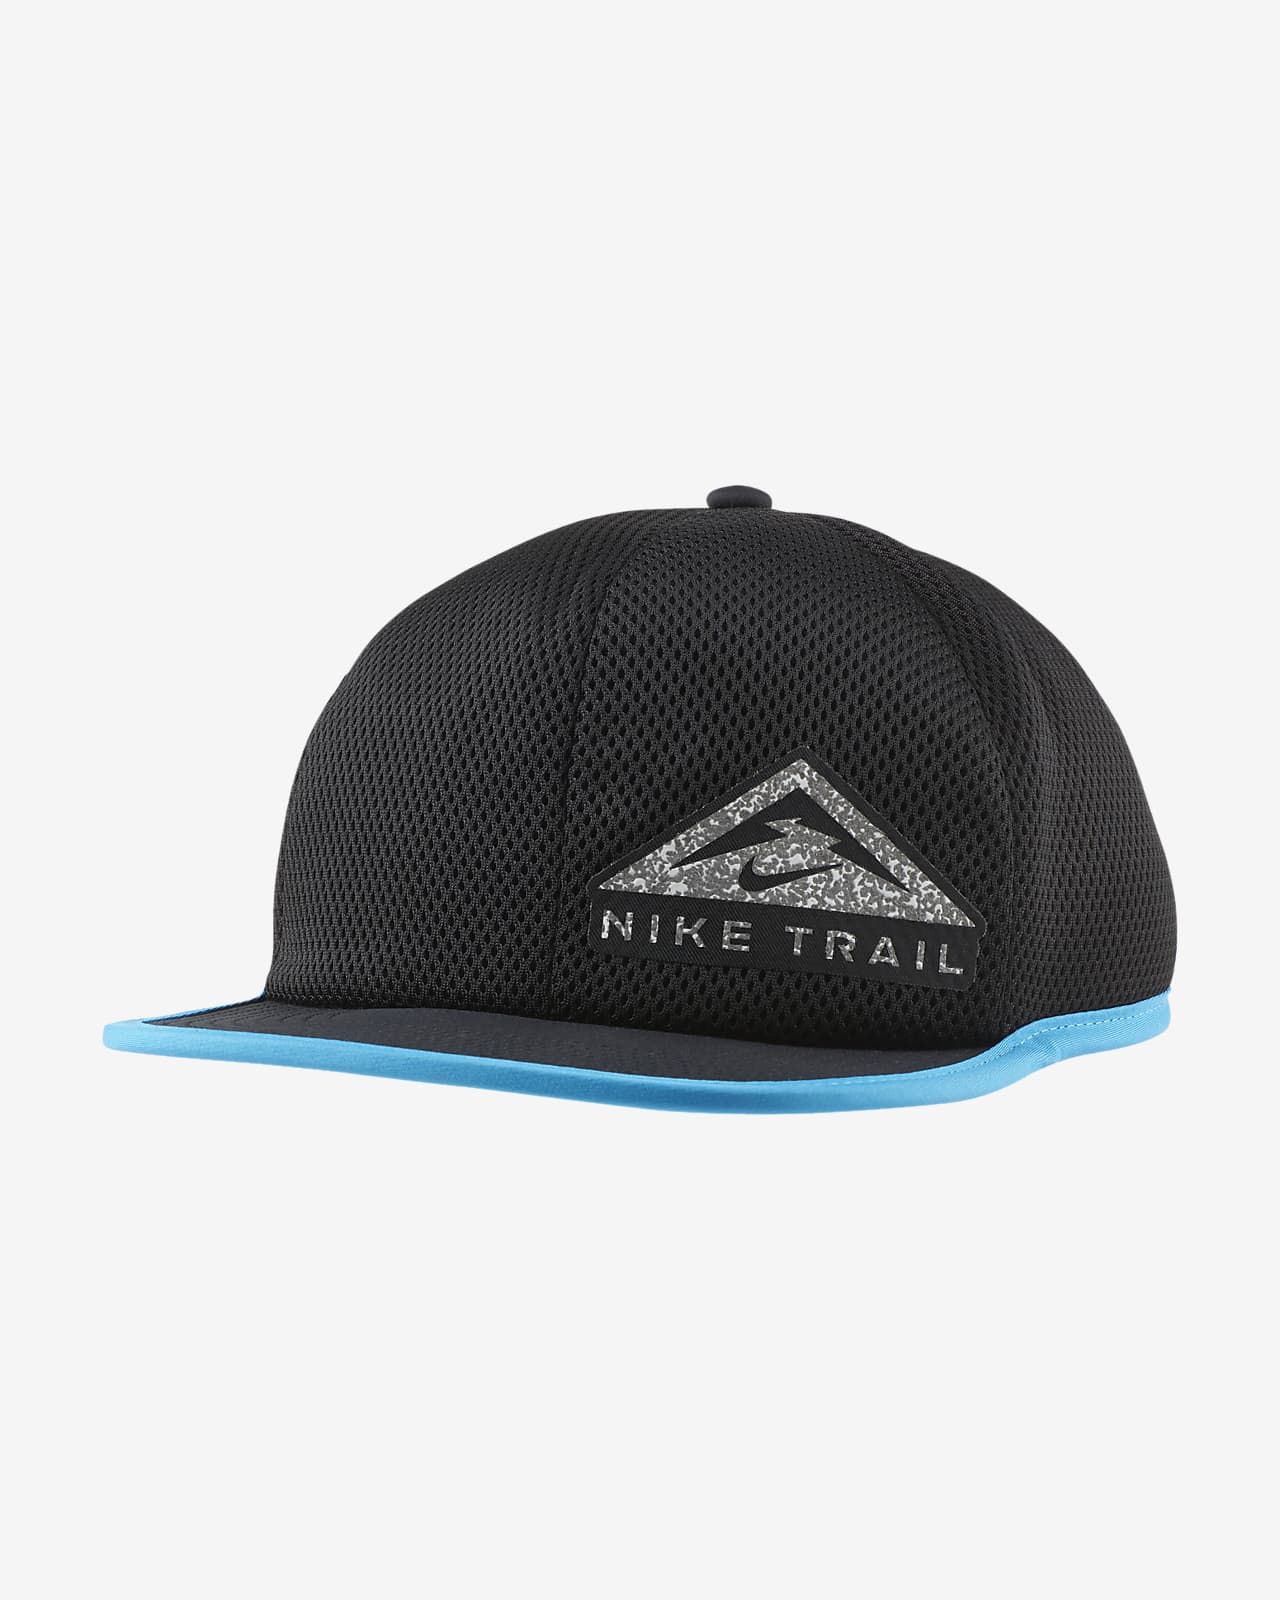 nike trail cap black